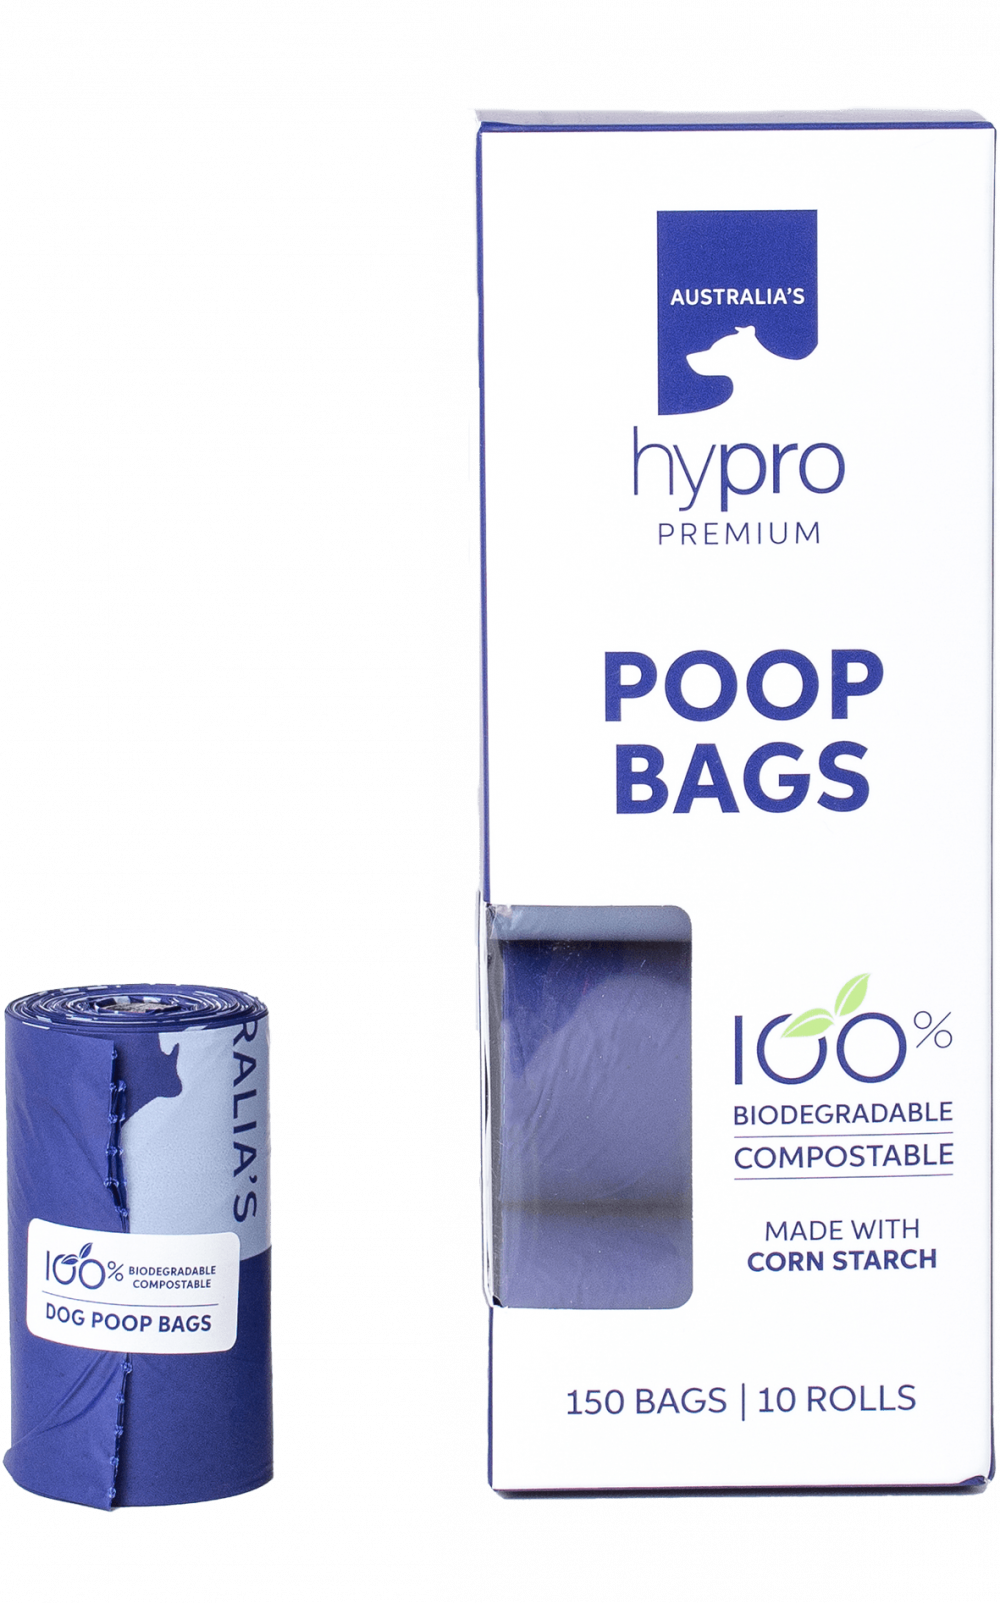 Hypro Premium Poop Bags